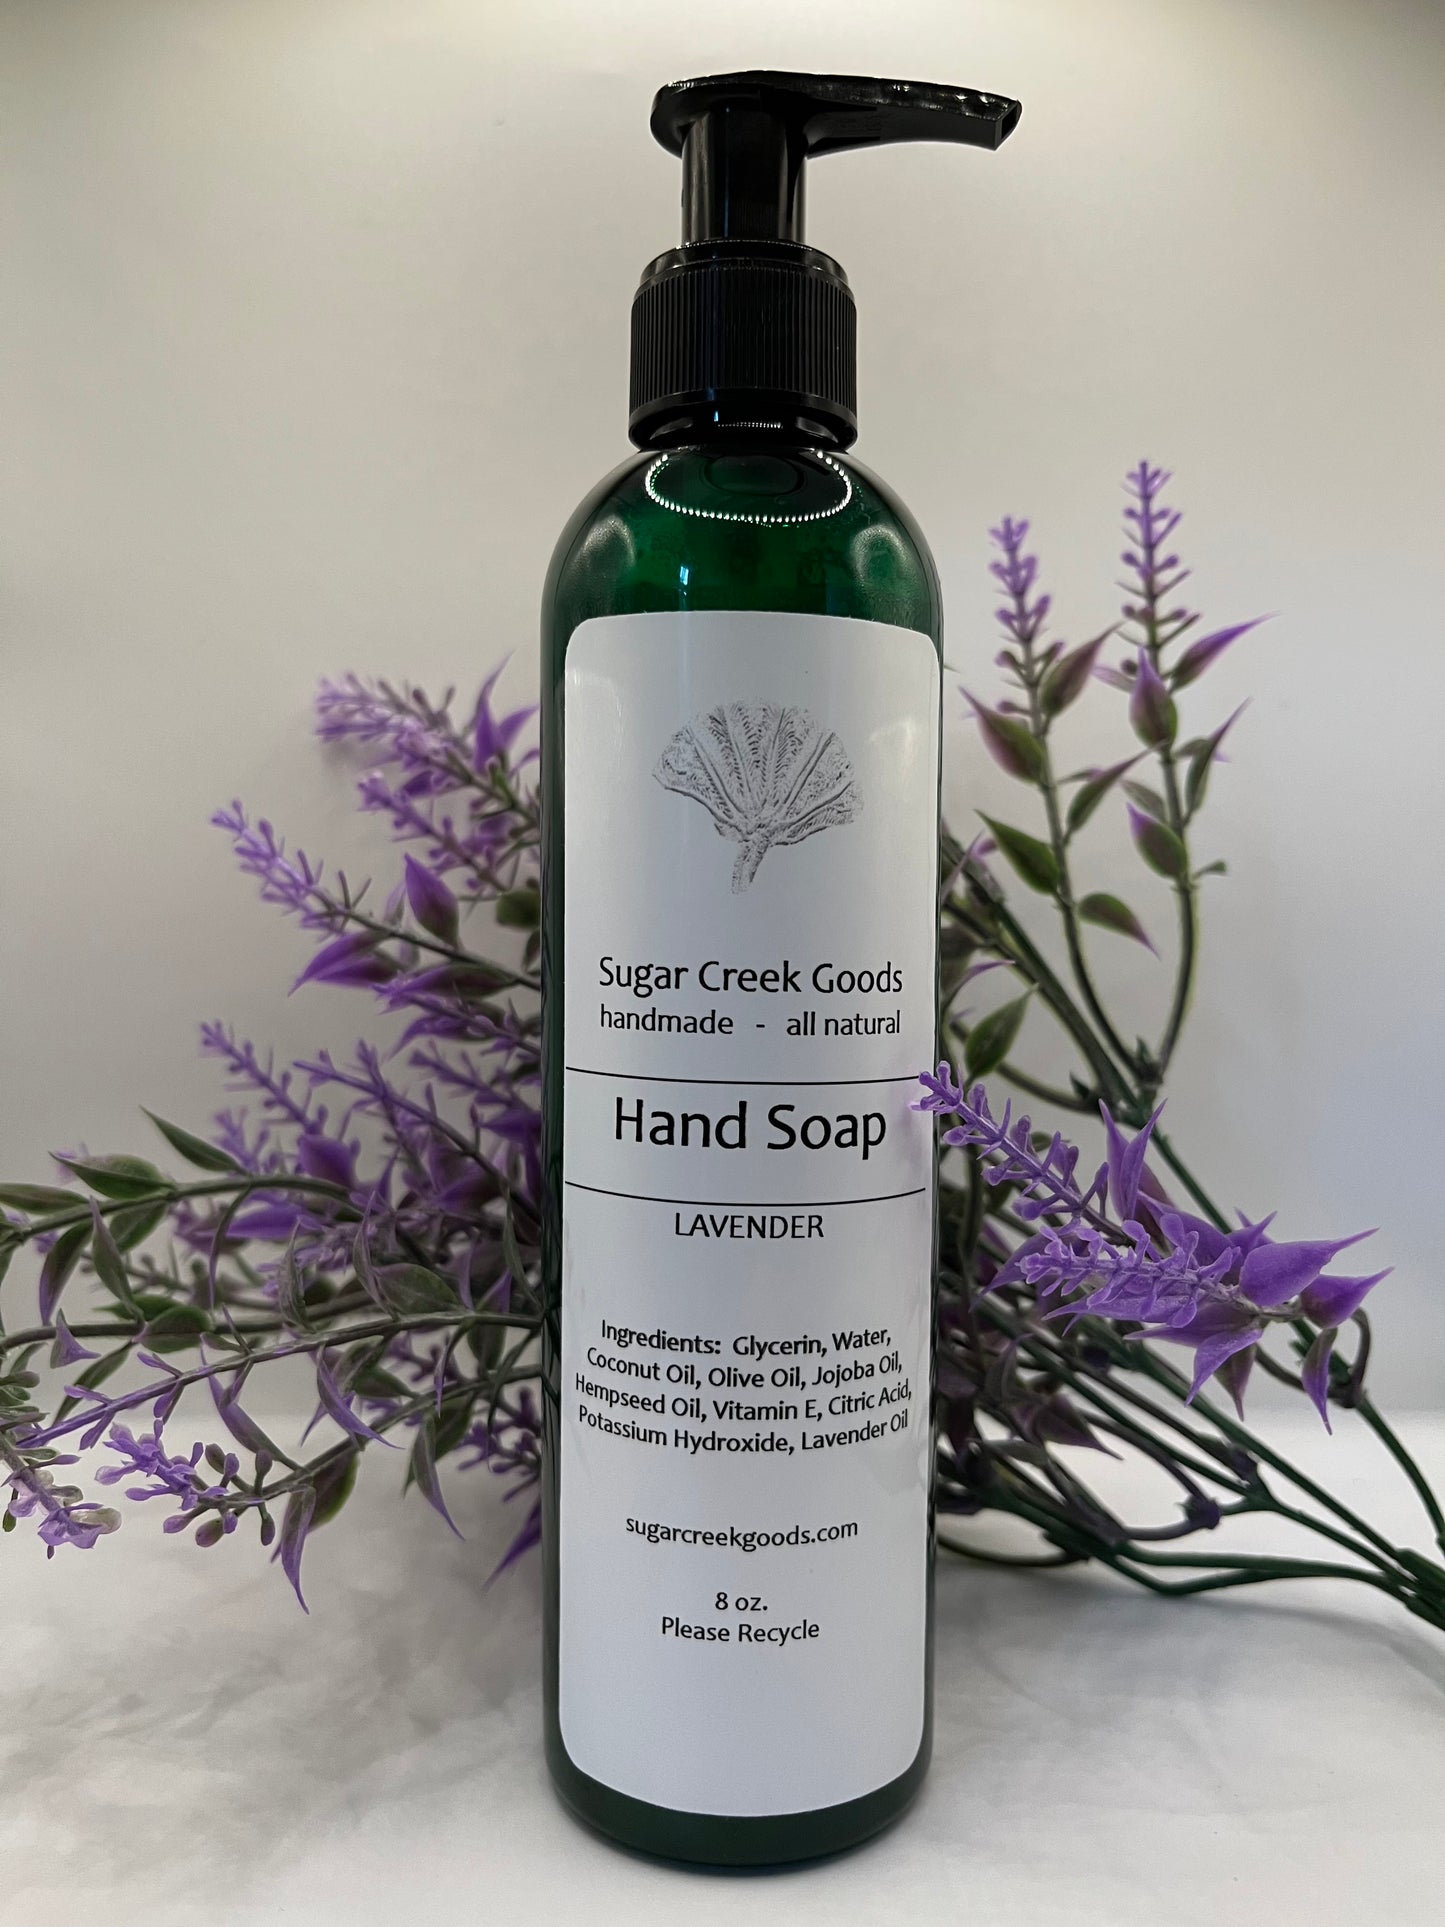 Lavender Hand Soap